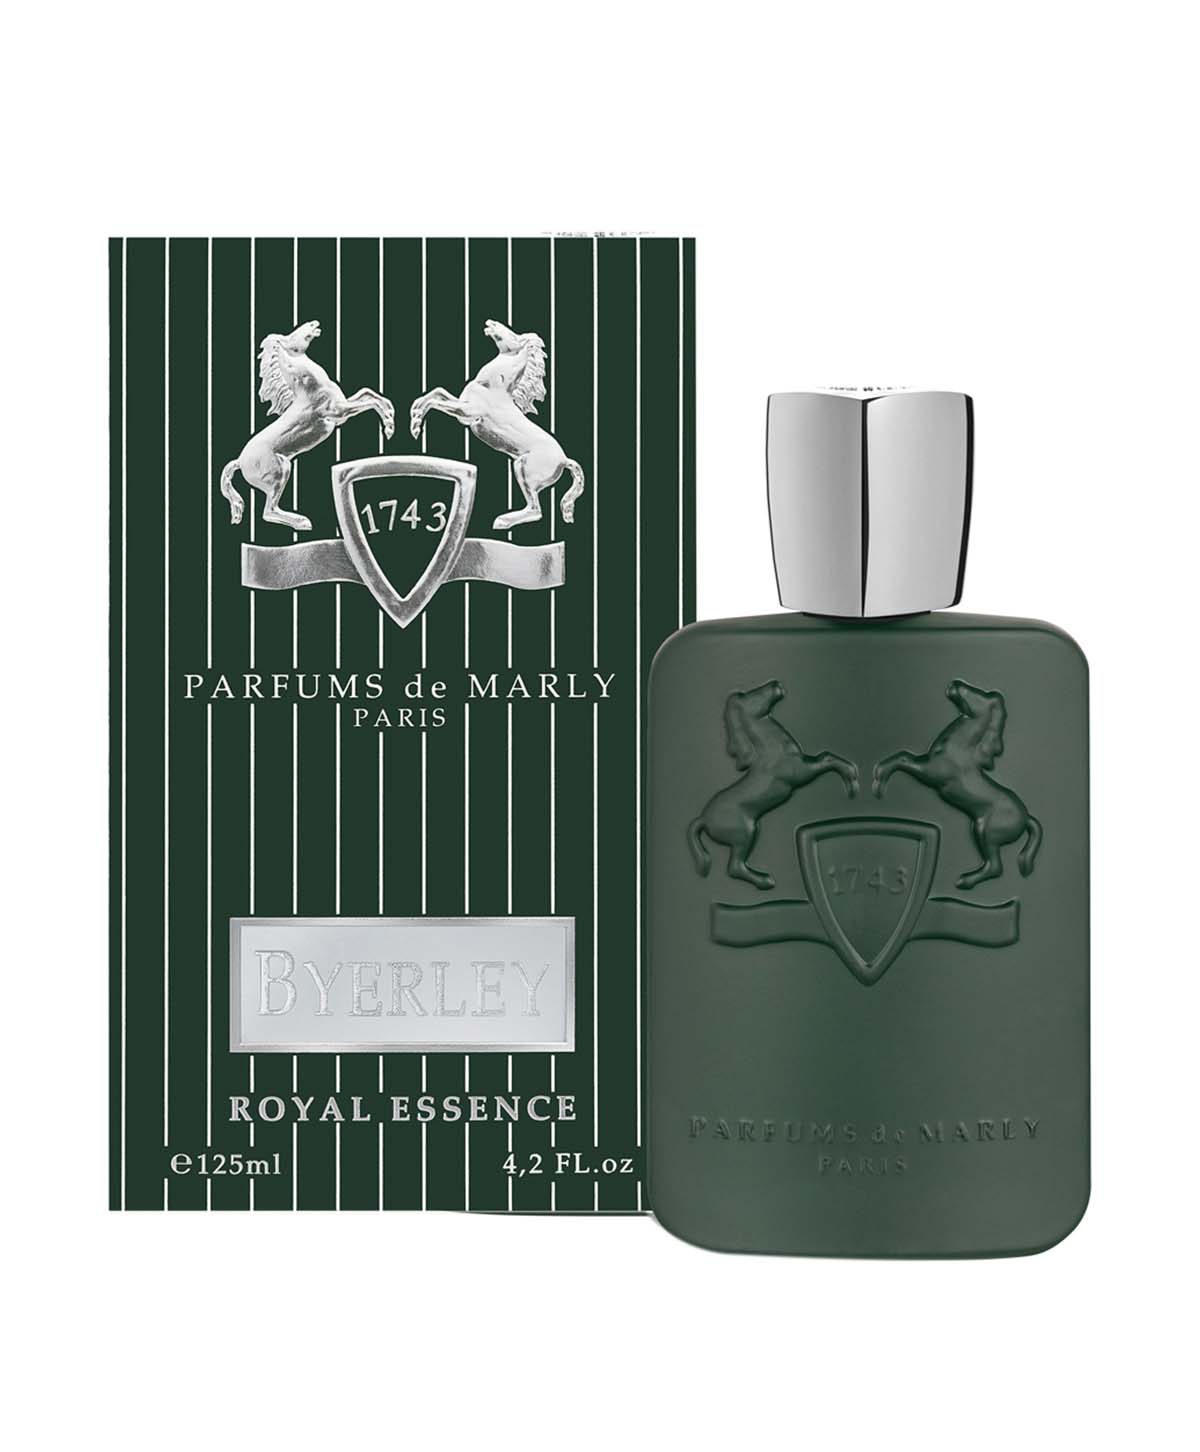 Royal essence. Parfums de Marly Paris оригинал. Parfums de Marly бутик. Parfum de Marly мужской. Духи Parfum de Marly Pegasus.